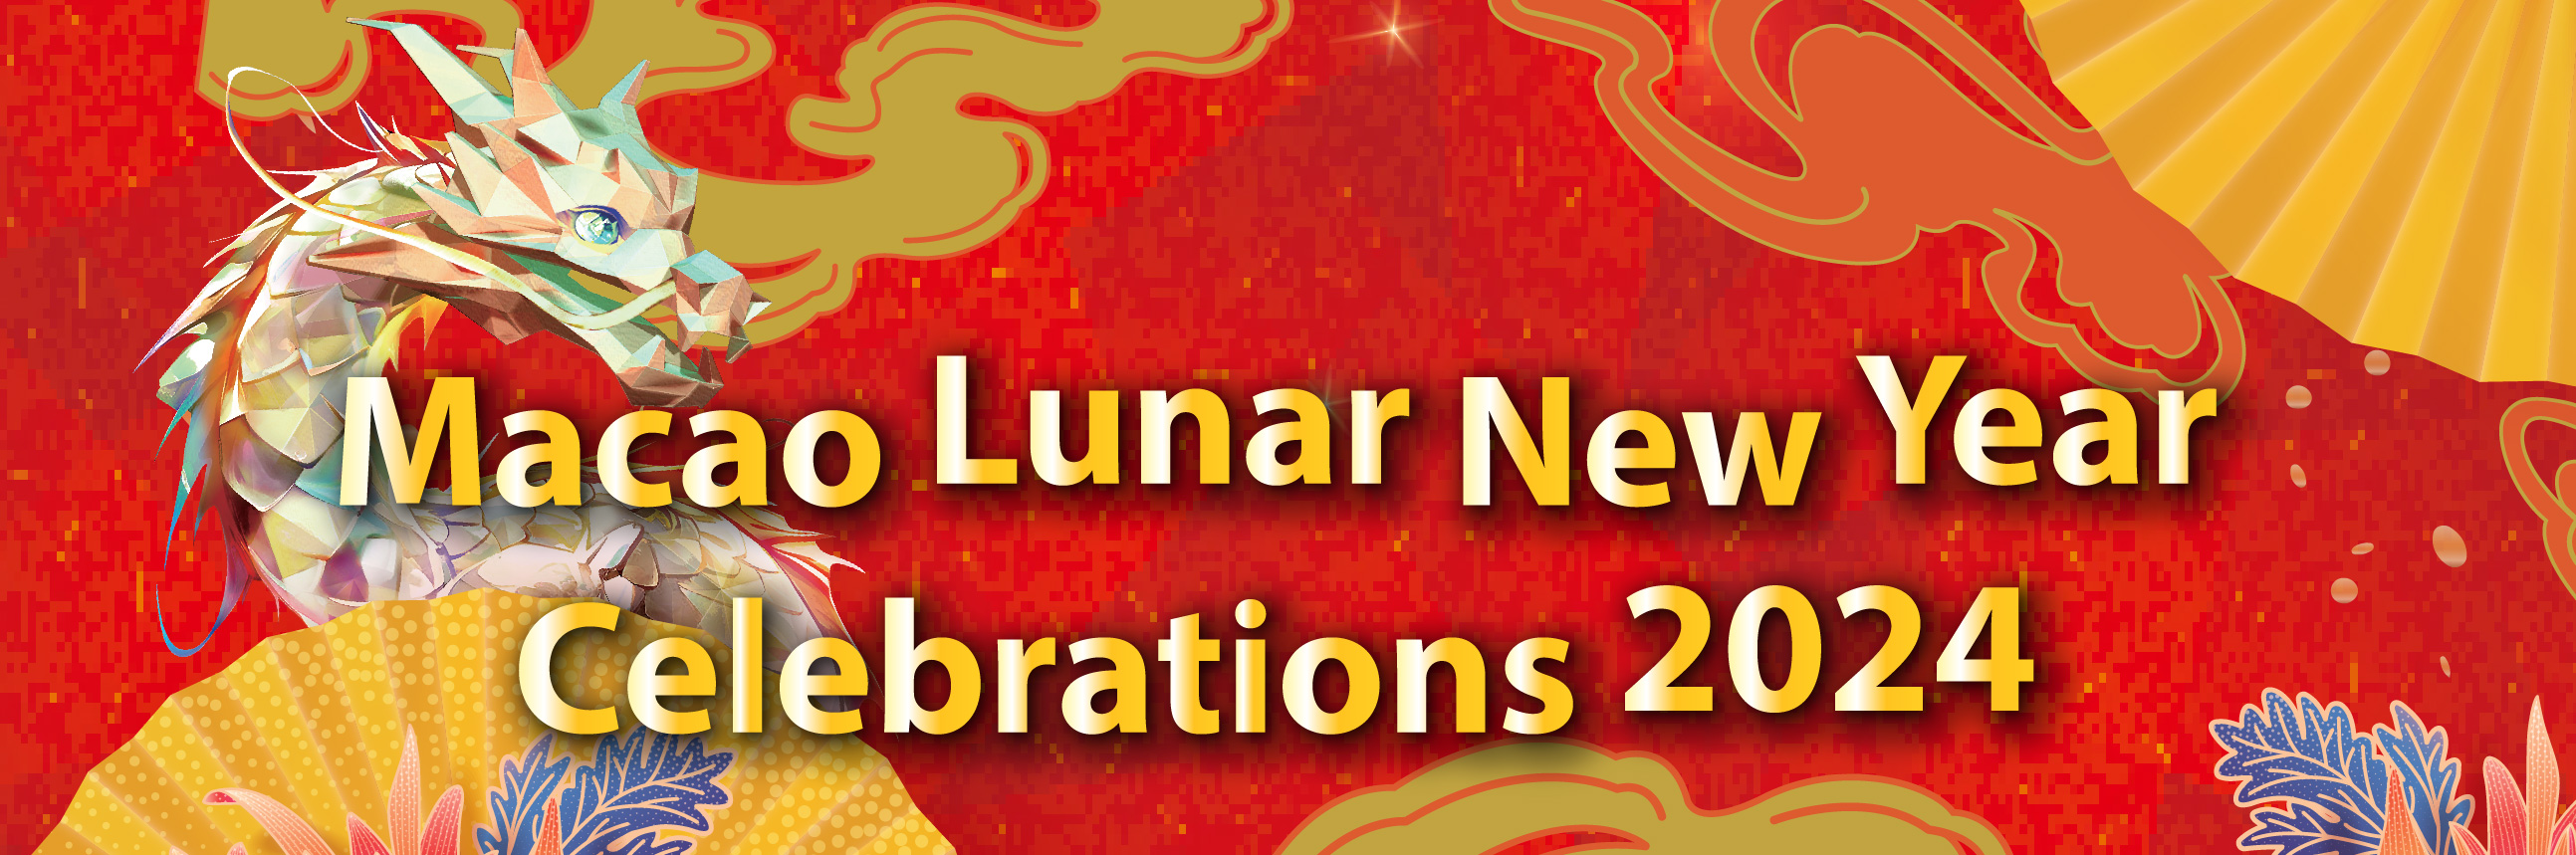 Macao Lunar New Year Celebrations 2024